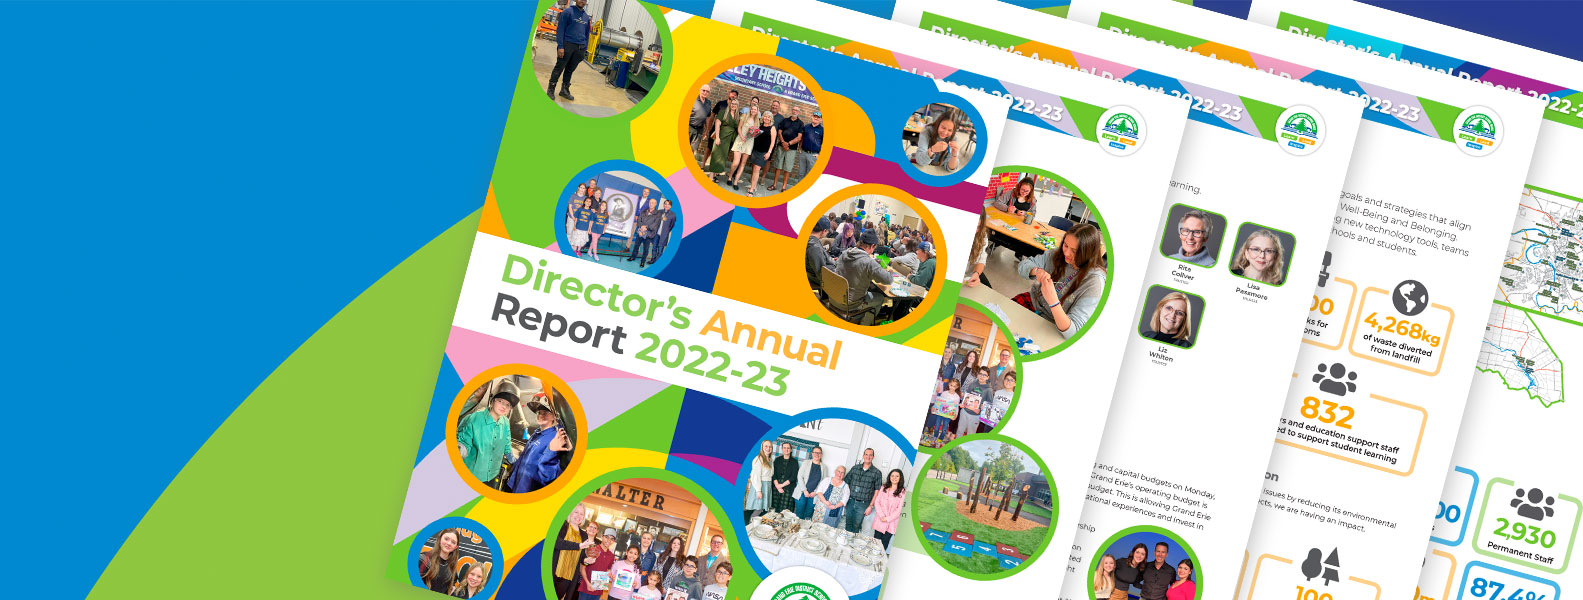 Director's <br>Annual <br>Report 2022-23